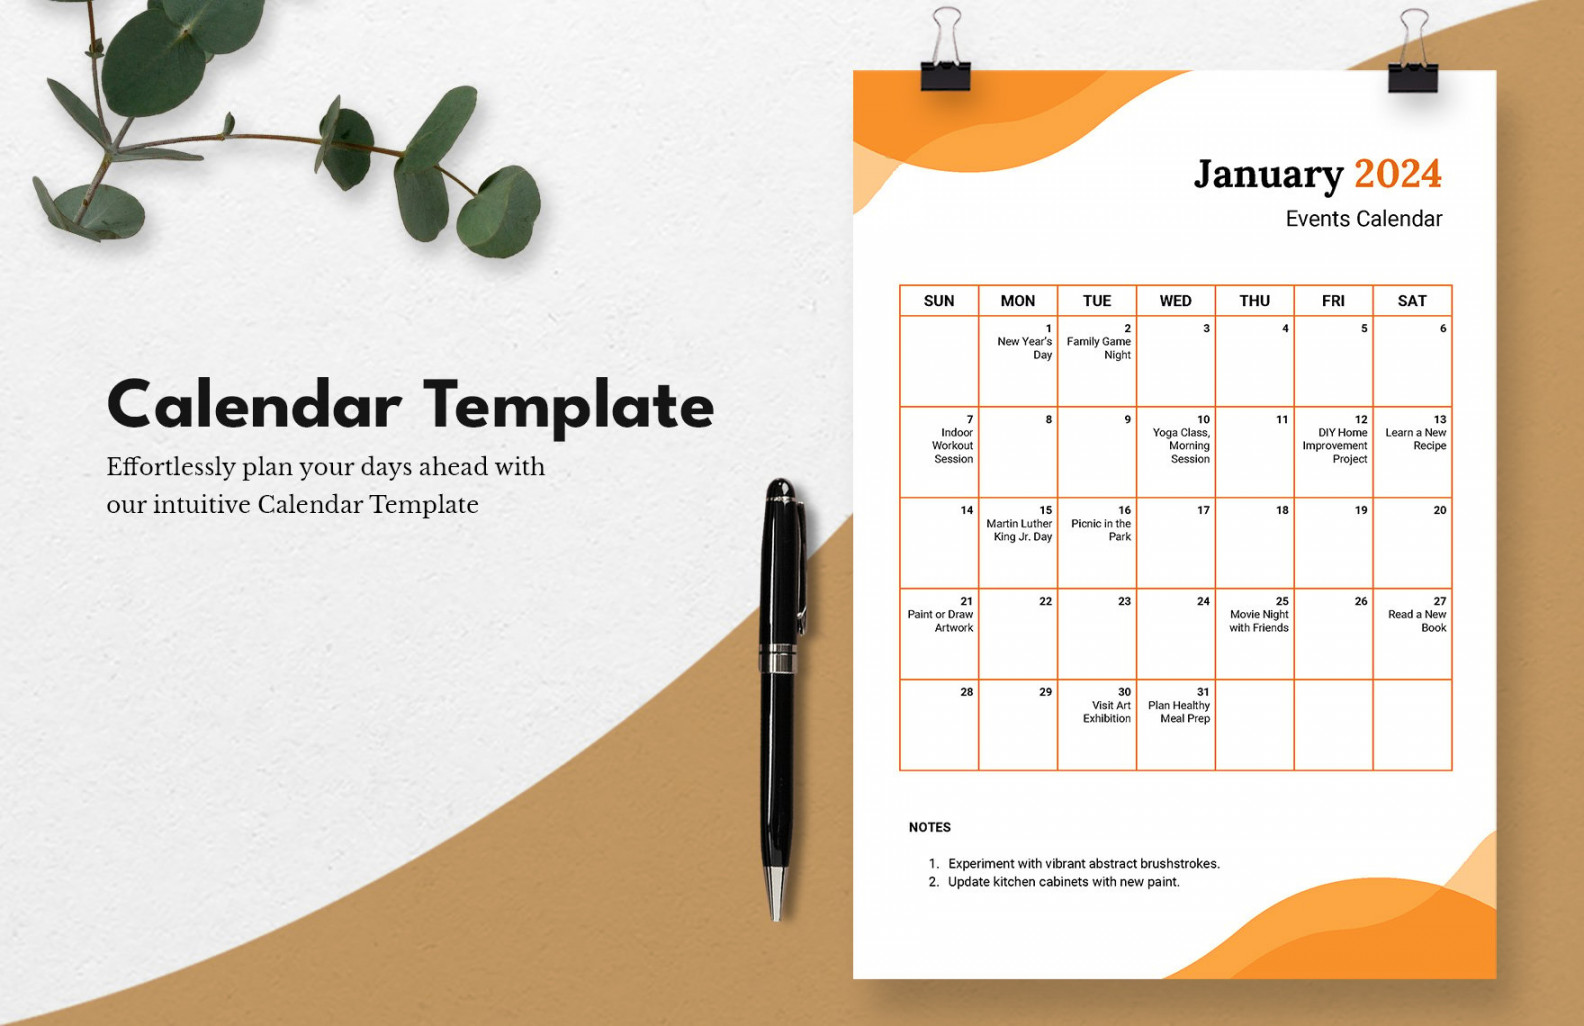 FREE Calendar Template - Download in Word, Google Docs, Excel, PDF